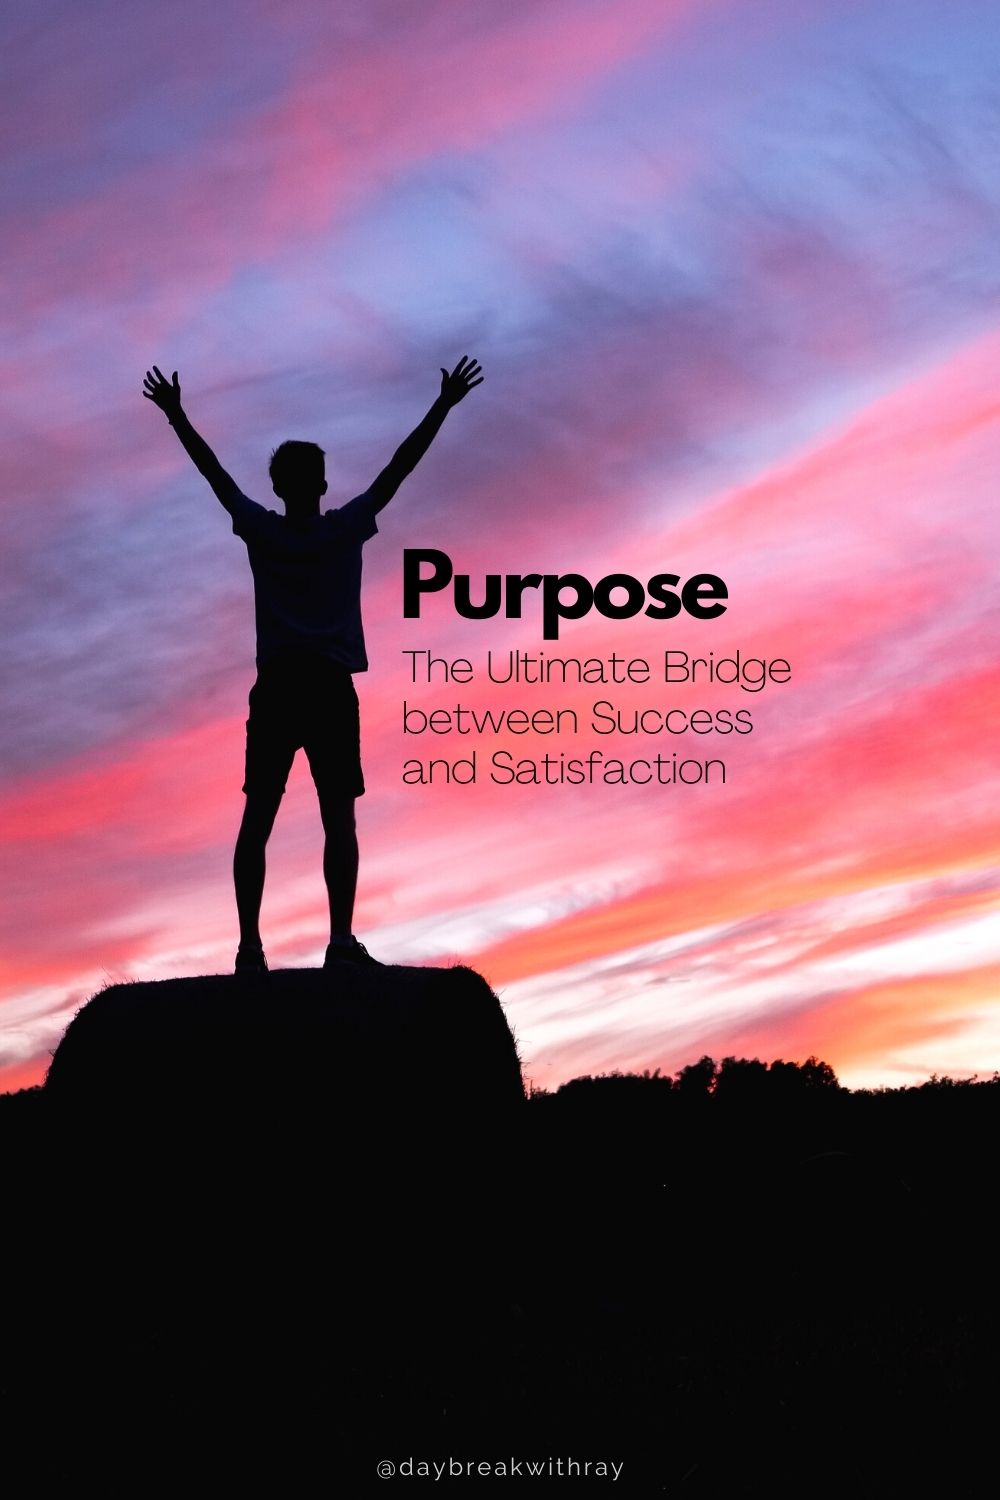 Purpose The Ultimate Bridge between Success and Satisfaction